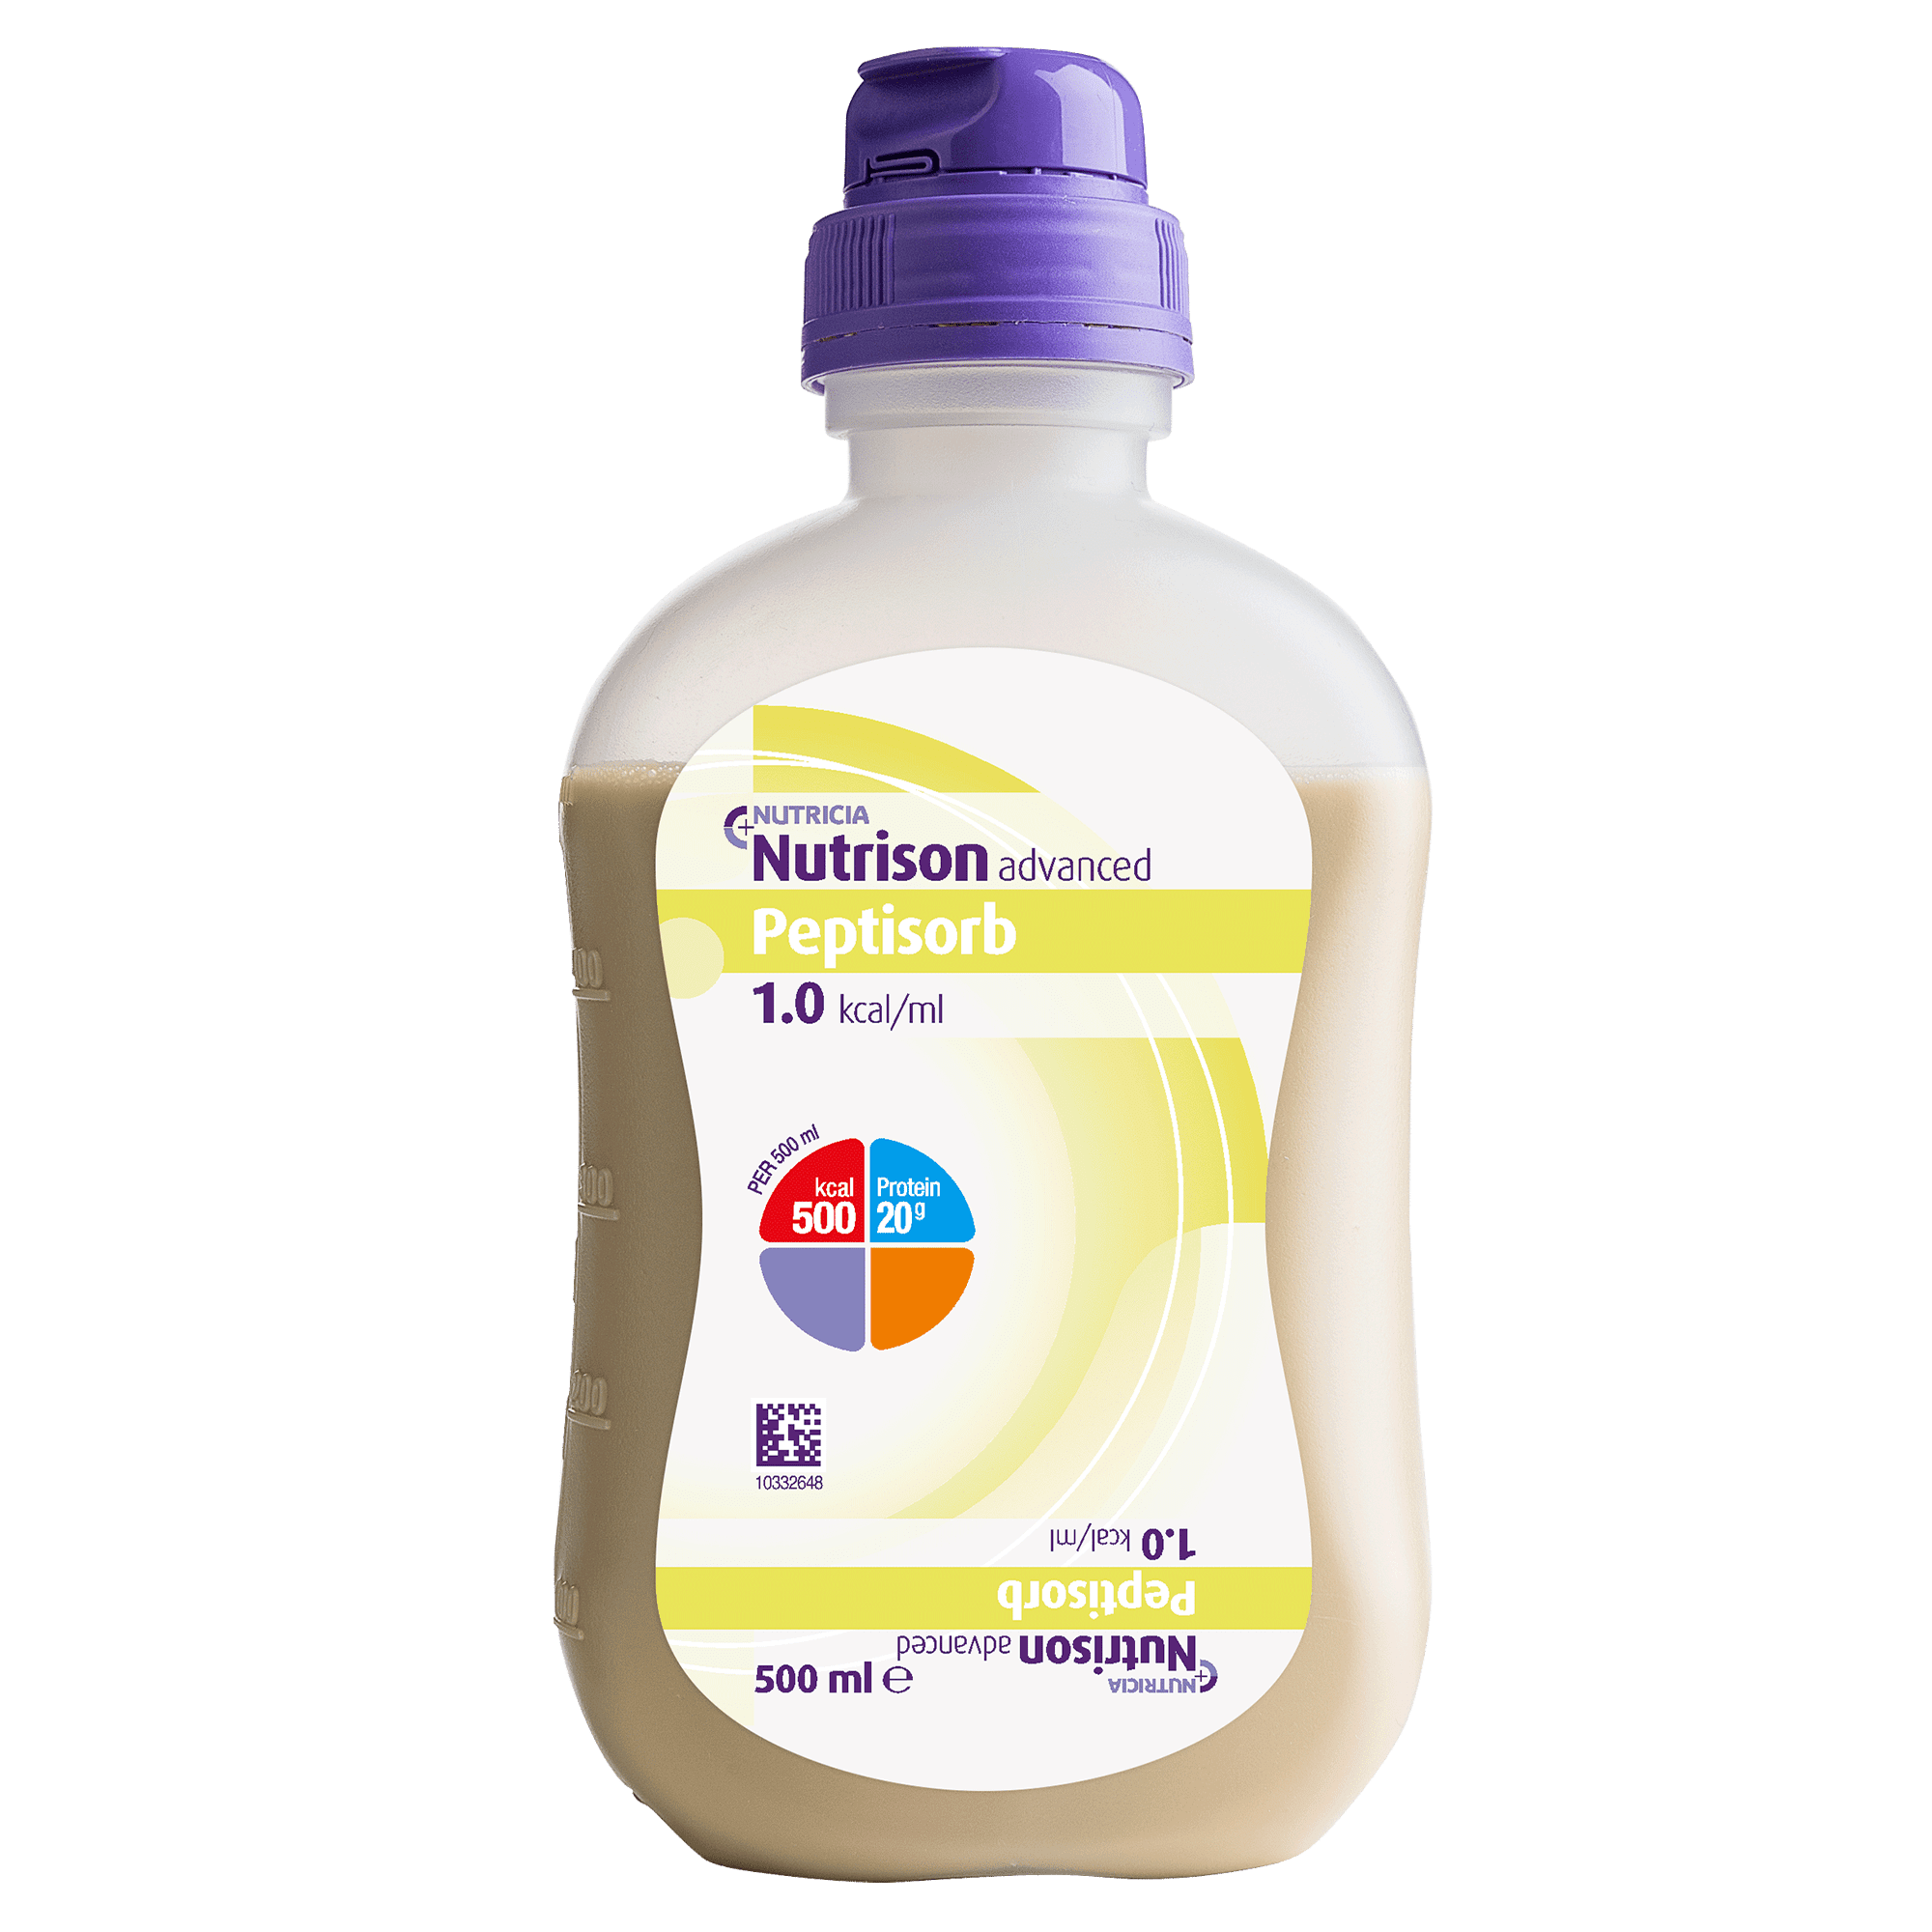 Нутризон Эдванст Пептисорб, пластиковая бутылка, 500 мл — Nutricia .